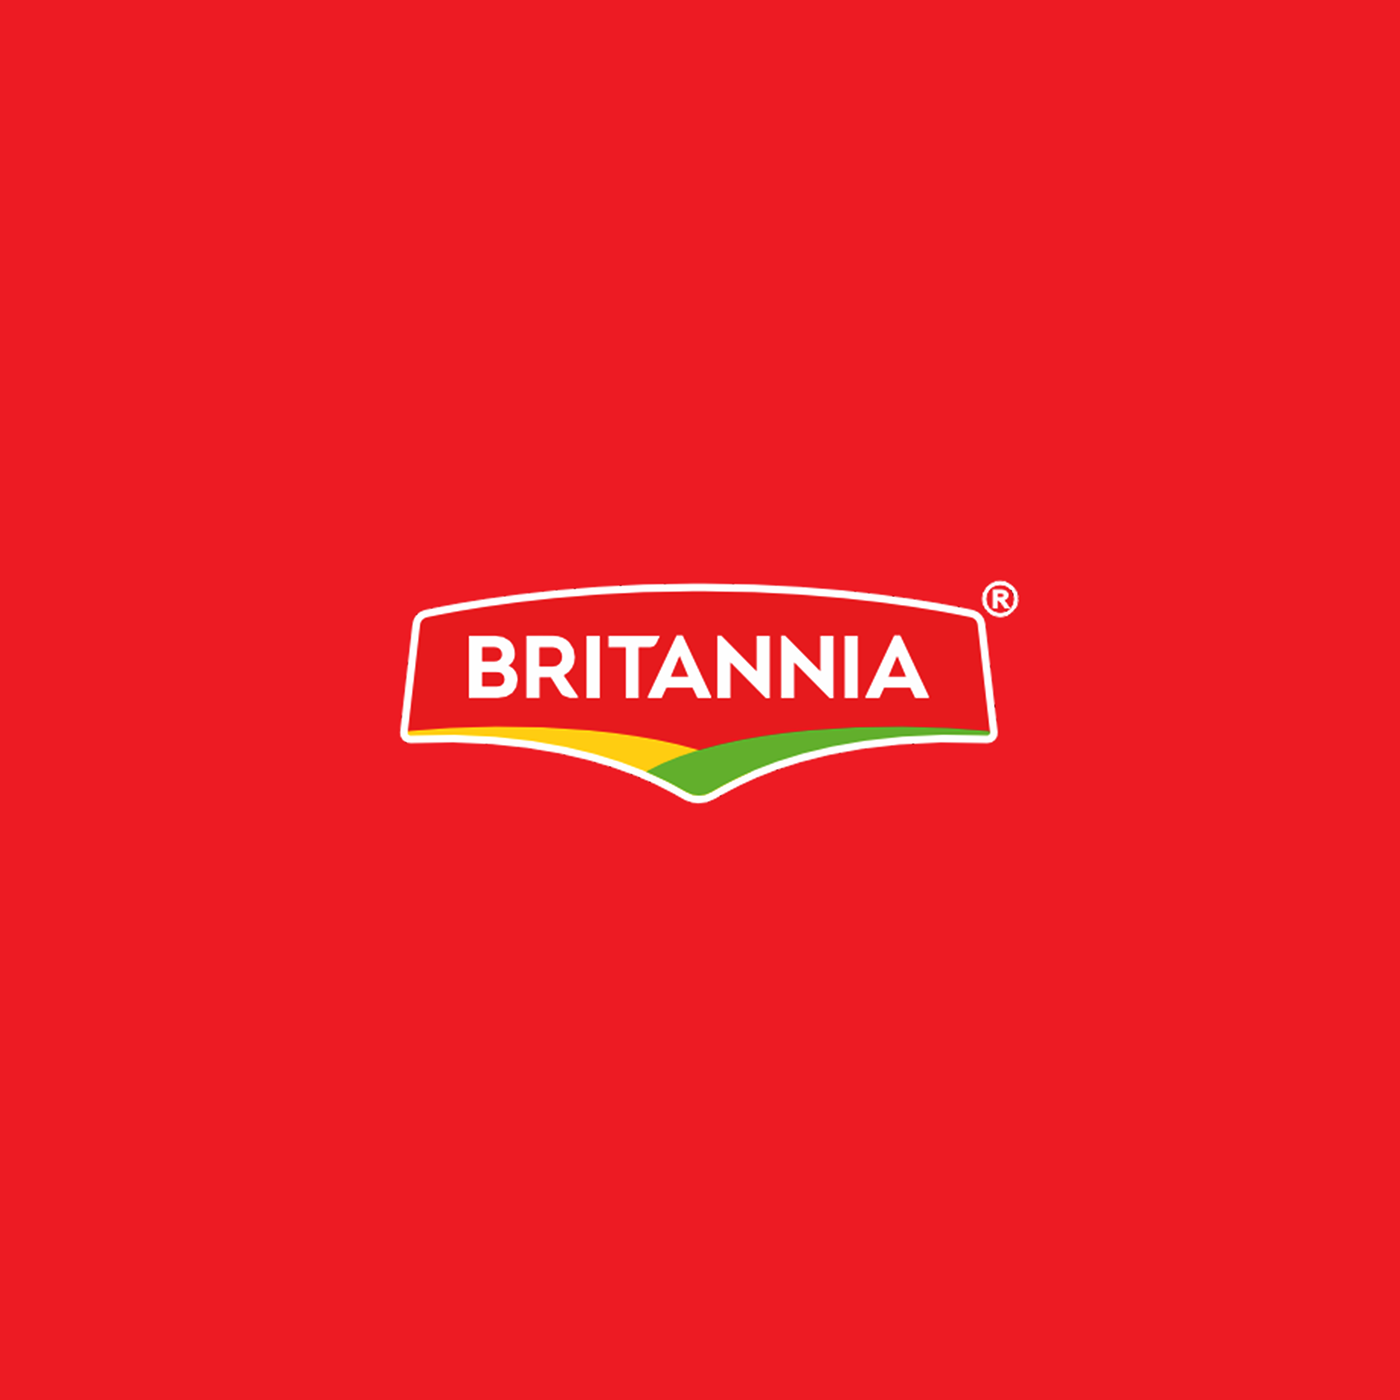 Packaging packaging design Britannia Advertising  agency Abasana Advertising packaging ideas potazos